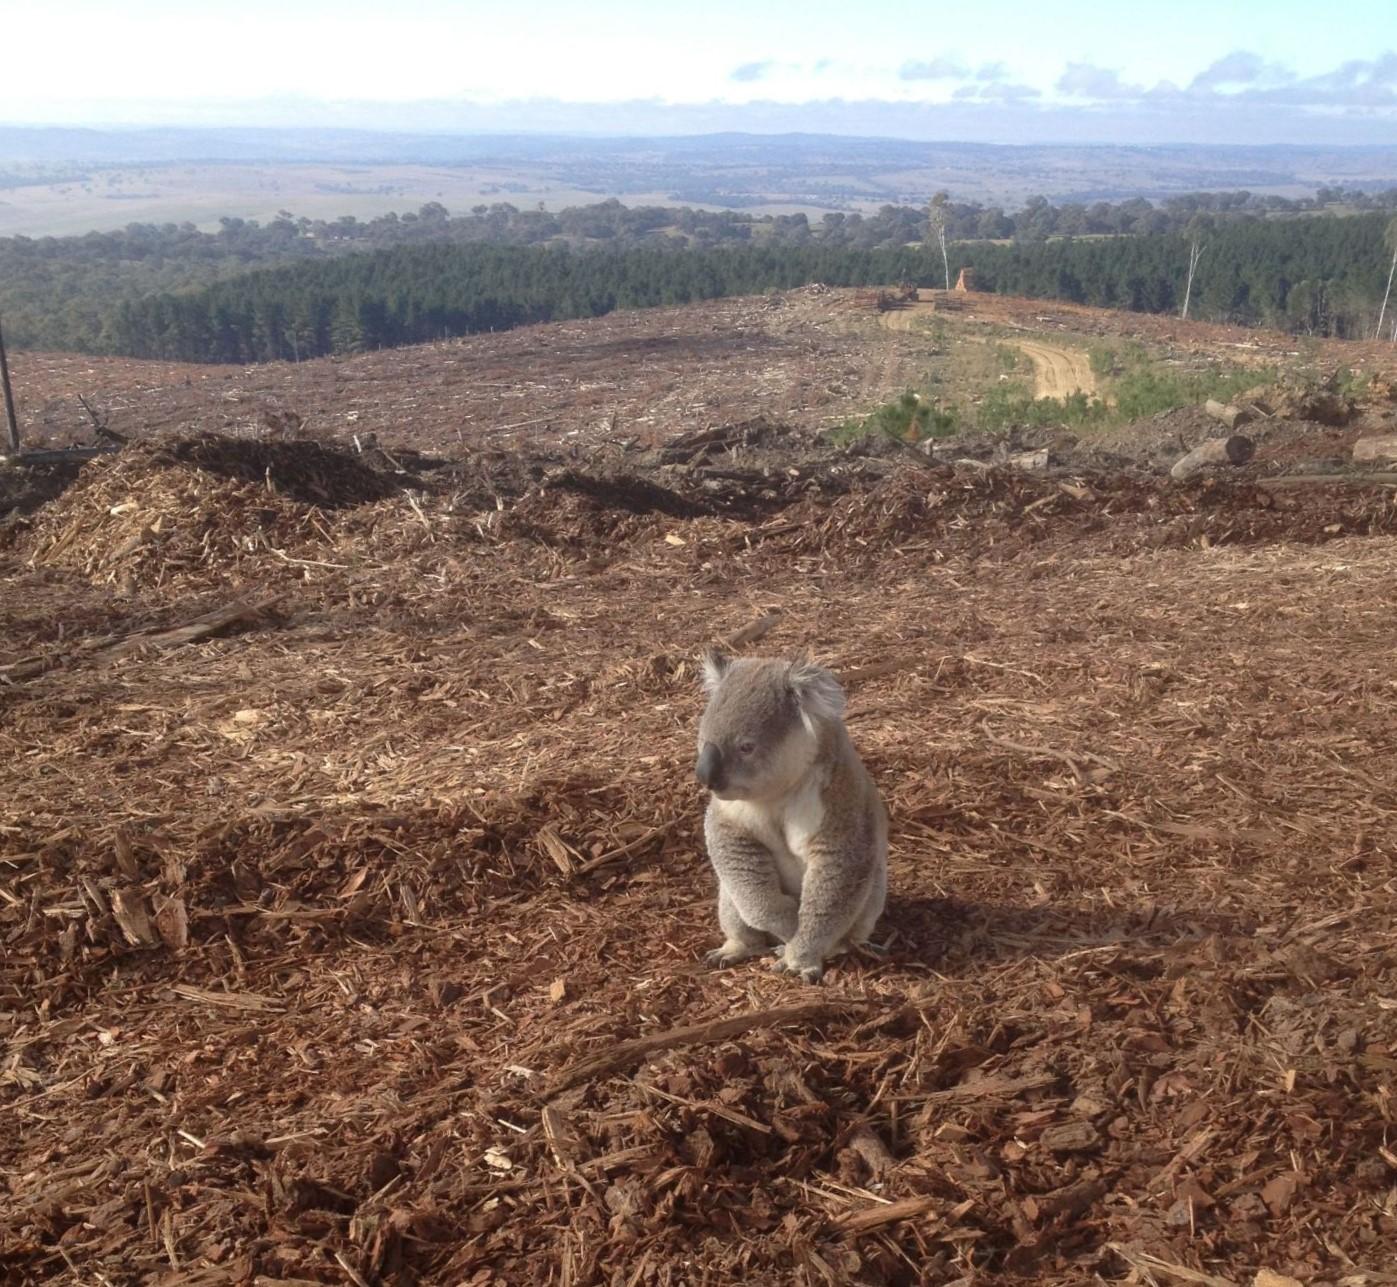 https://www.pittwateronlinenews.com/resources/Koala_Land_Clearing_biodiversity.jpg.opt1397x1287o0%2C0s1397x1287.jpg